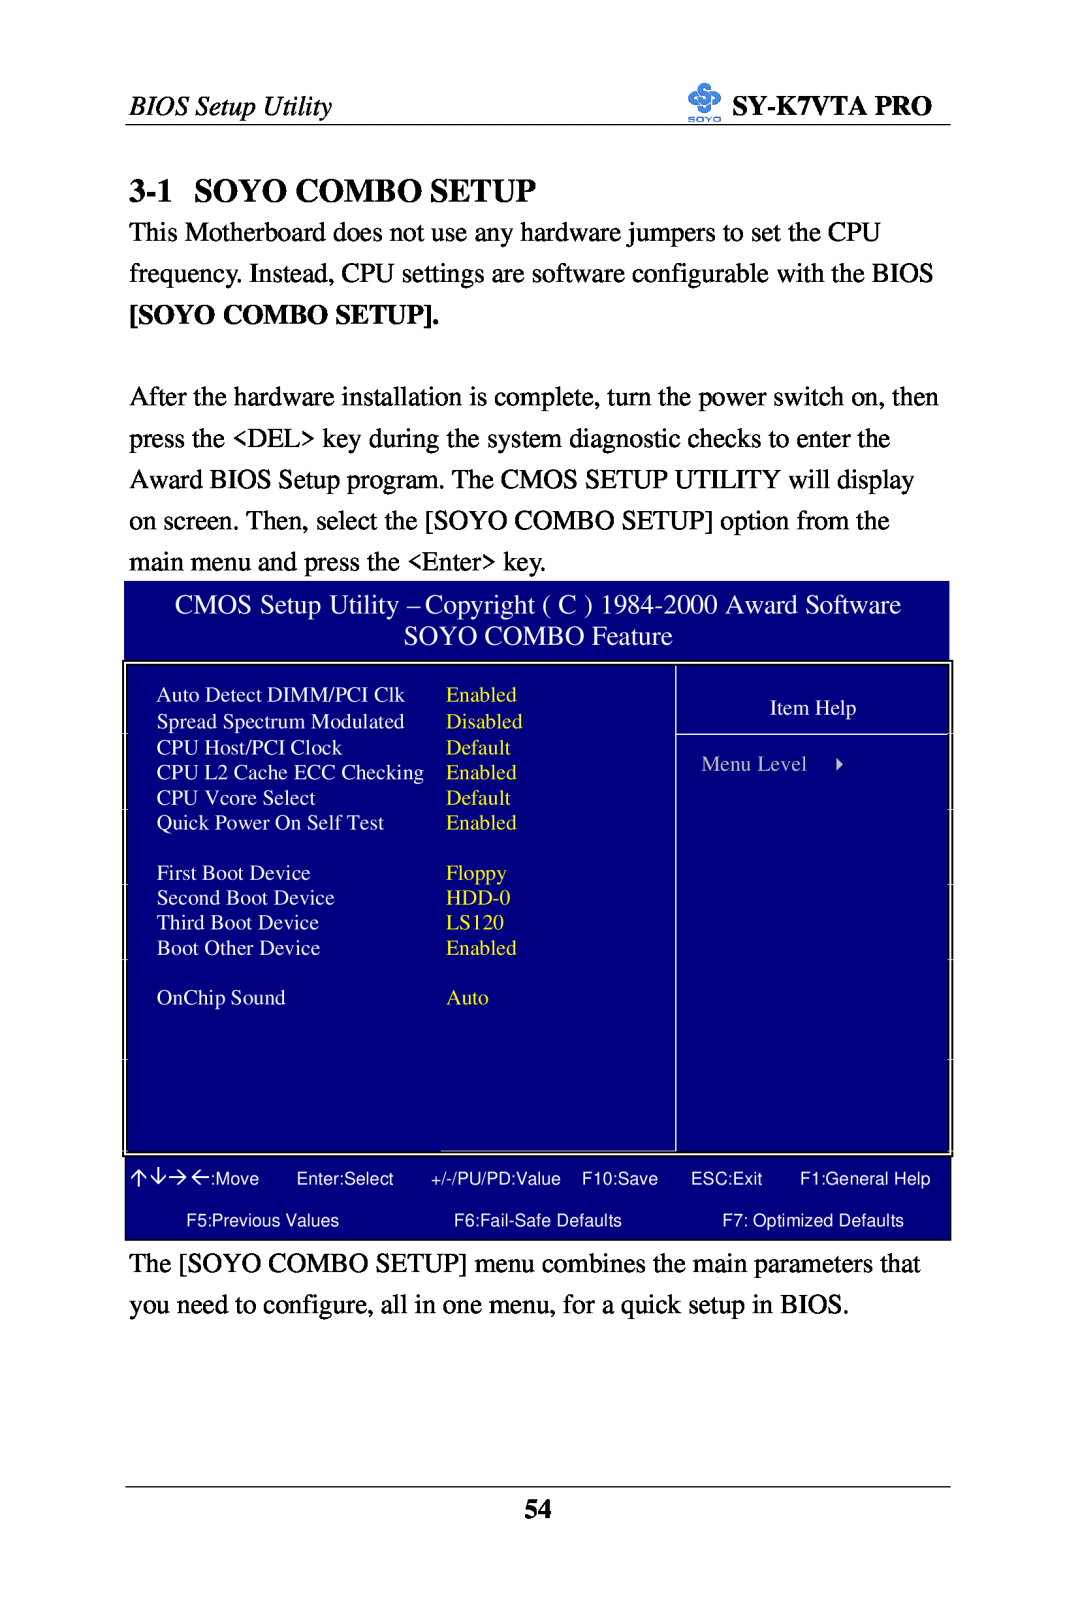 SOYO SY-K7VTA PRO Soyo Combo Setup, CMOS Setup Utility - Copyright C 1984-2000 Award Software, SOYO COMBO Feature 